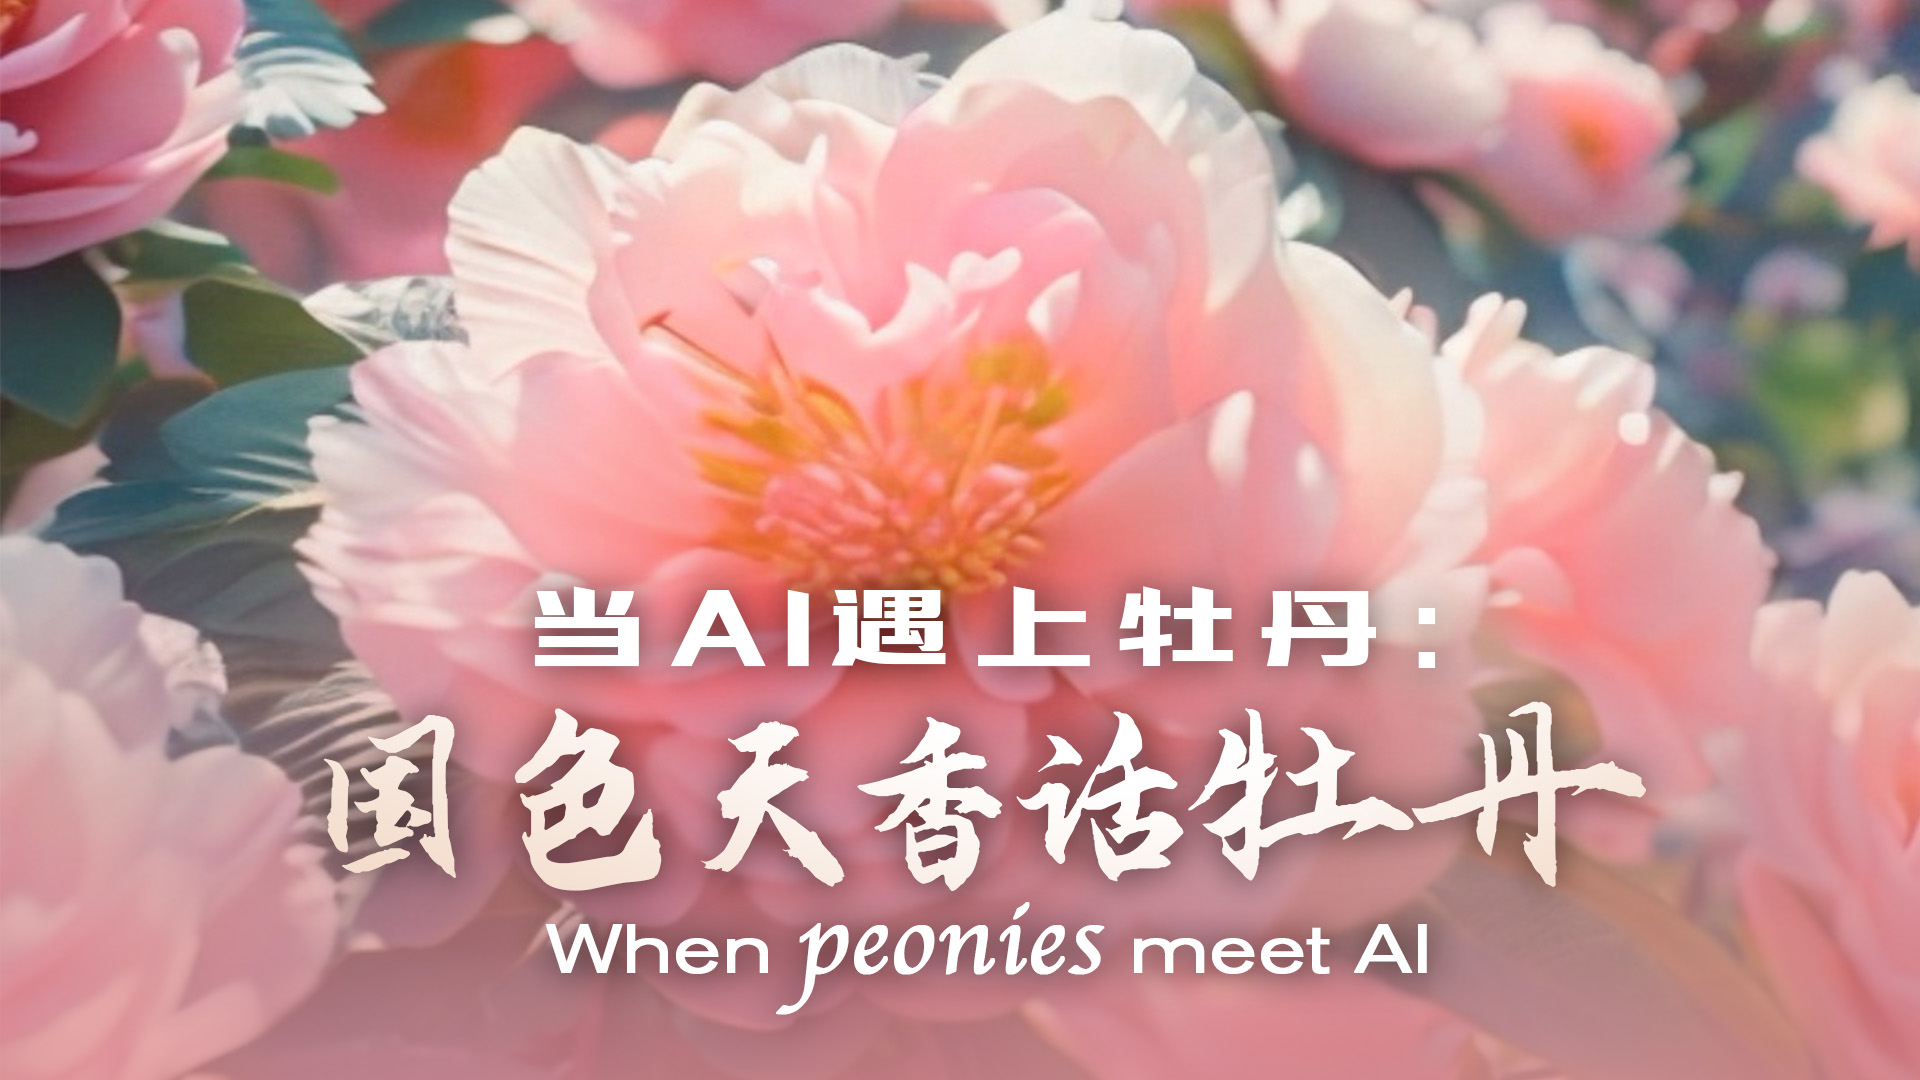 When peonies meet AI